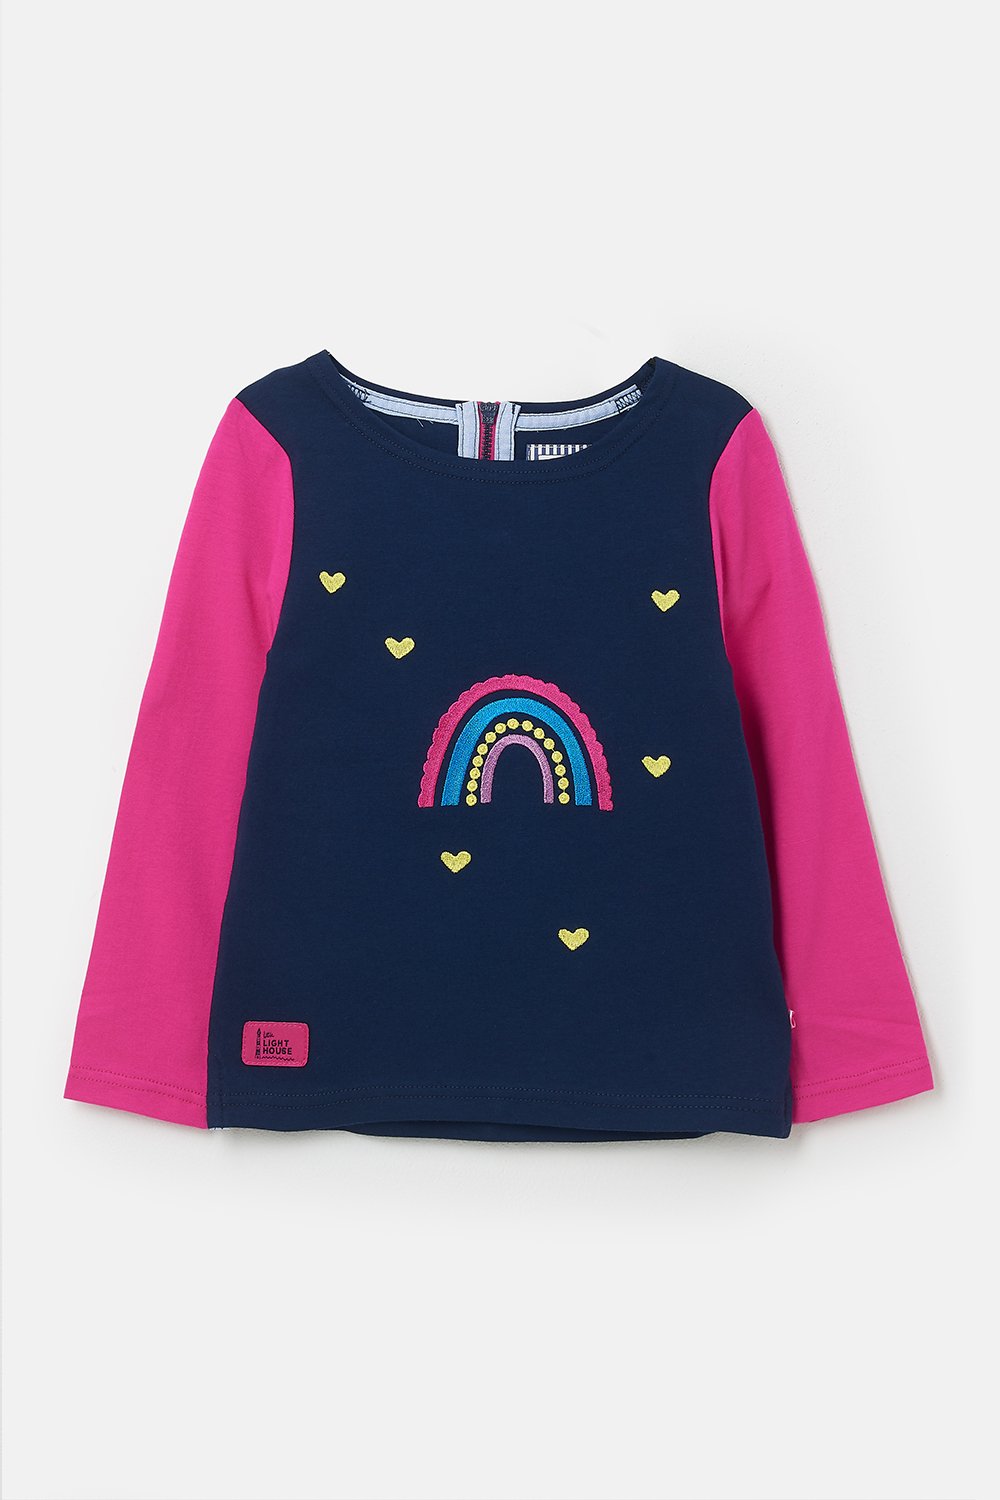 Lighthouse Causeway Kids Top / T-Shirt in Rainbow Applique